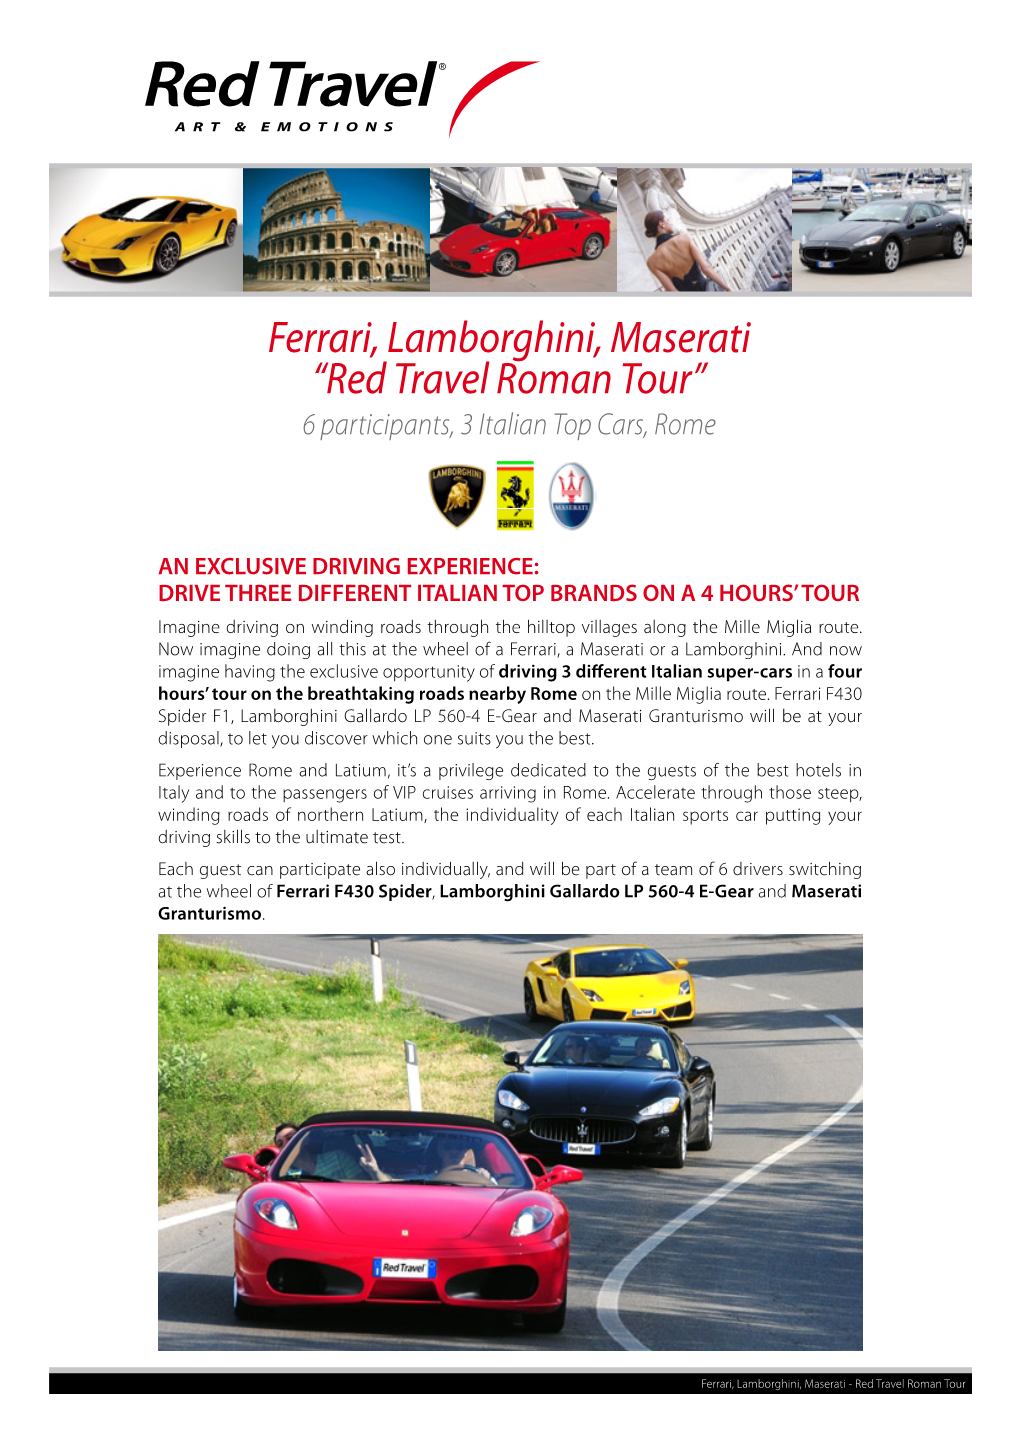 Ferrari, Lamborghini, Maserati “Red Travel Roman Tour” 6 Participants, 3 Italian Top Cars, Rome